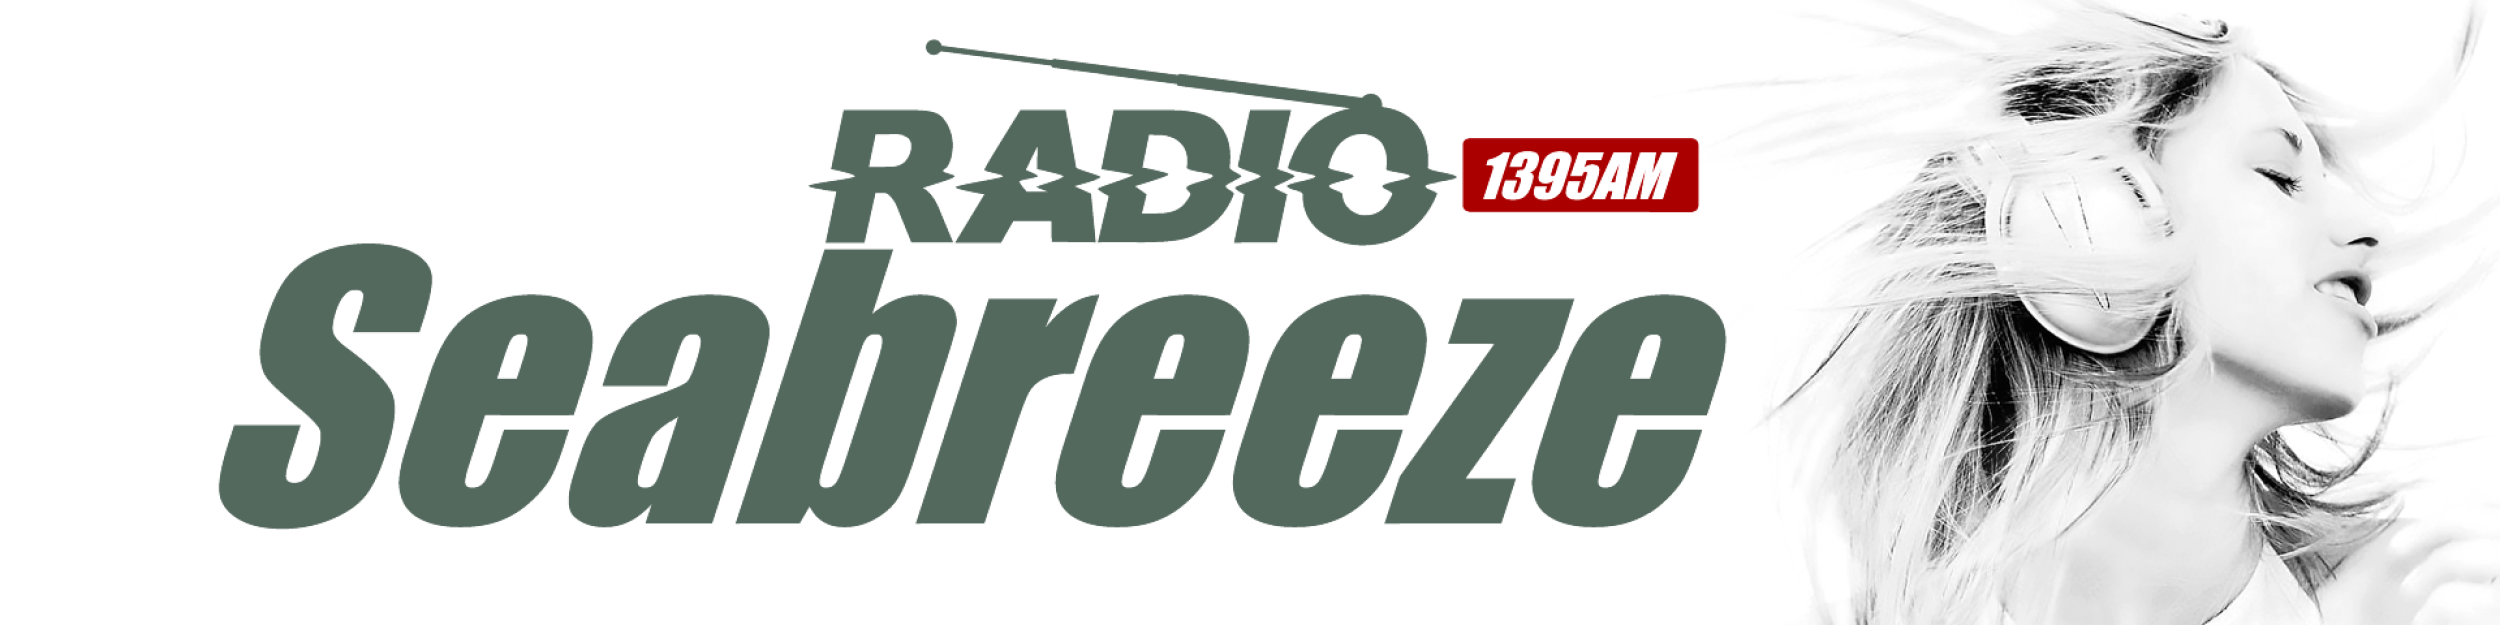 Radio Seabreeze